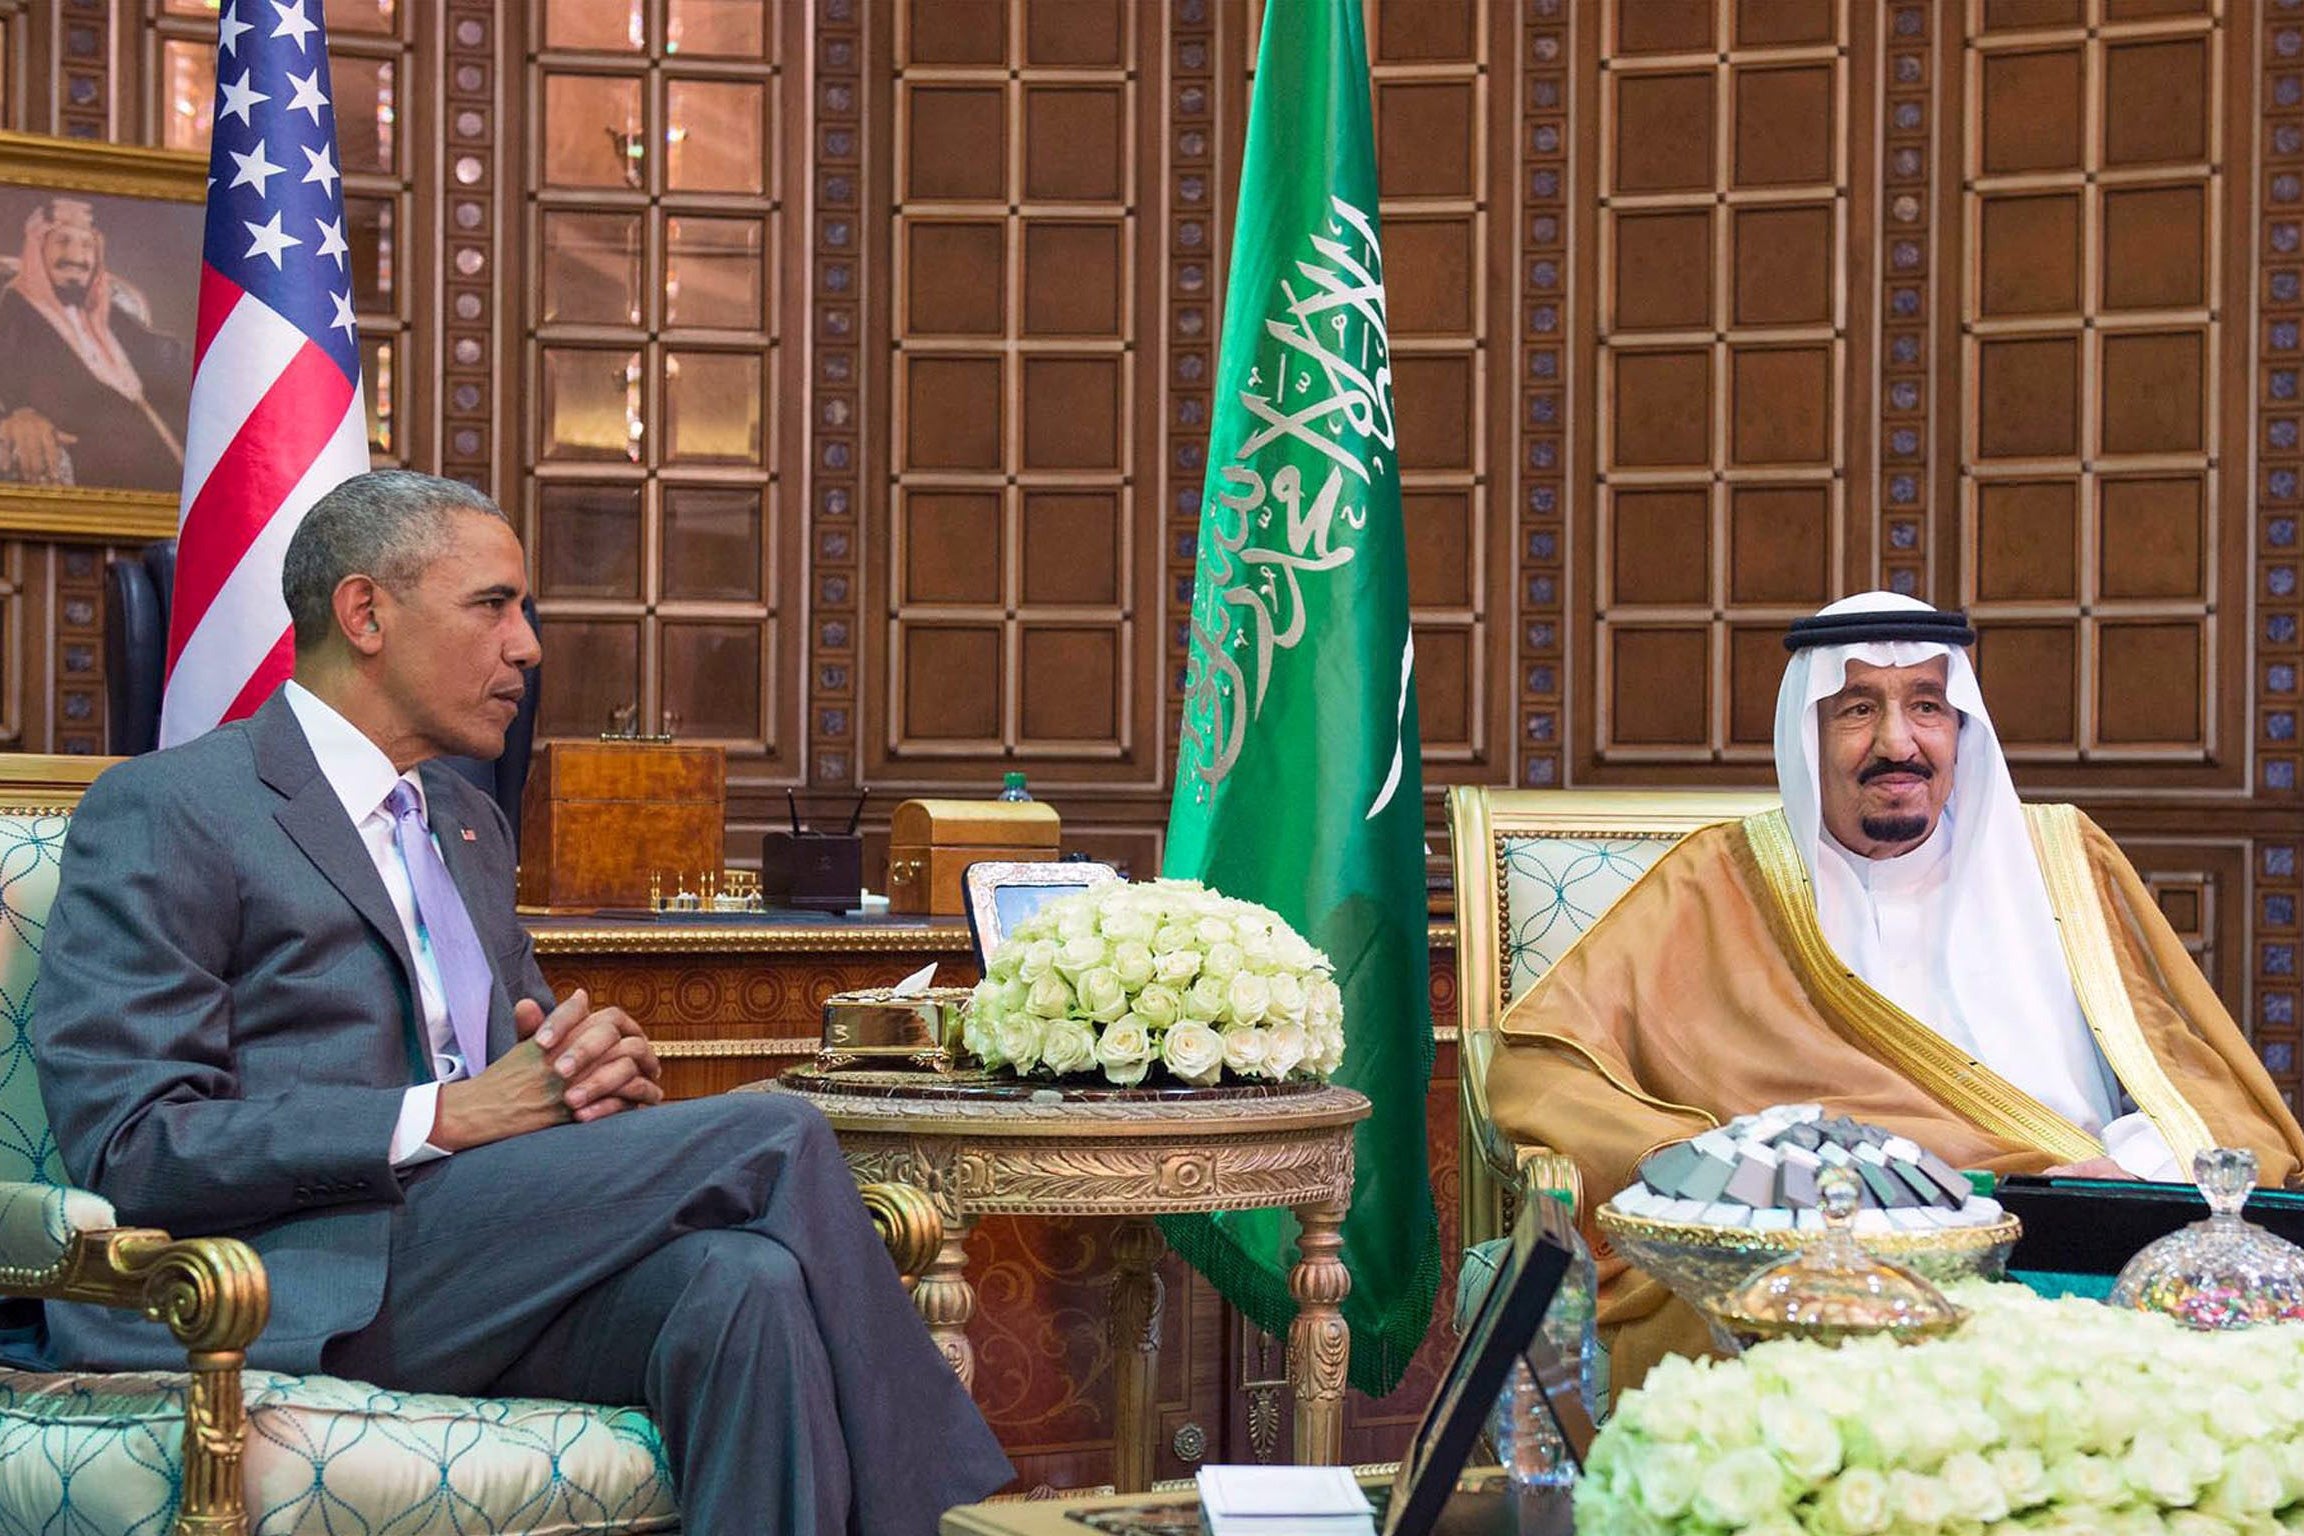 President Obama met King Salman in Riyadh yesterday